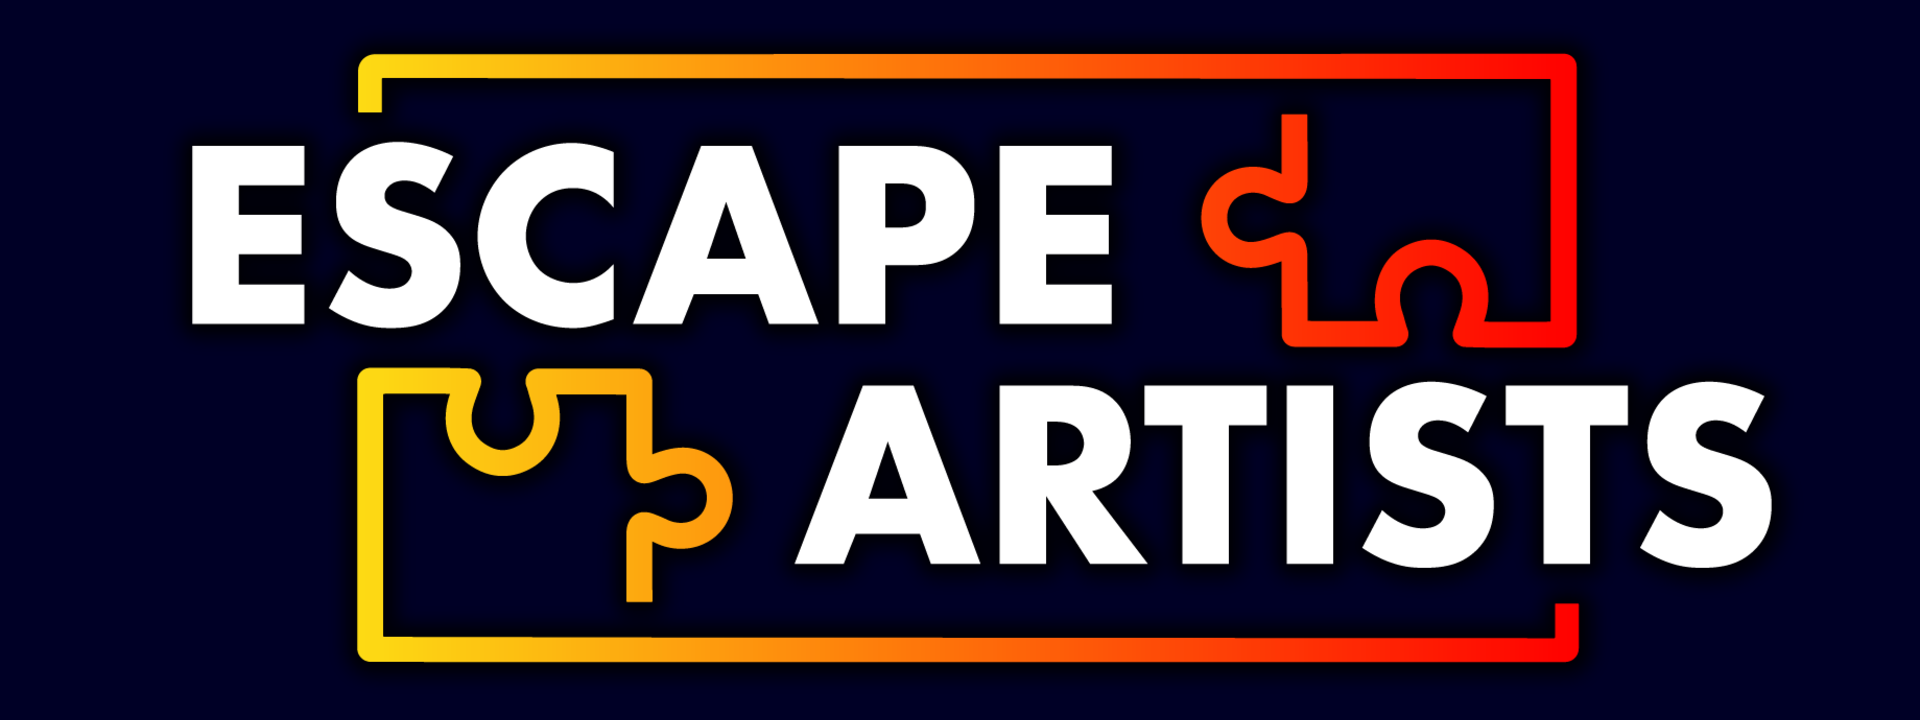 Escape Artists Logo.png